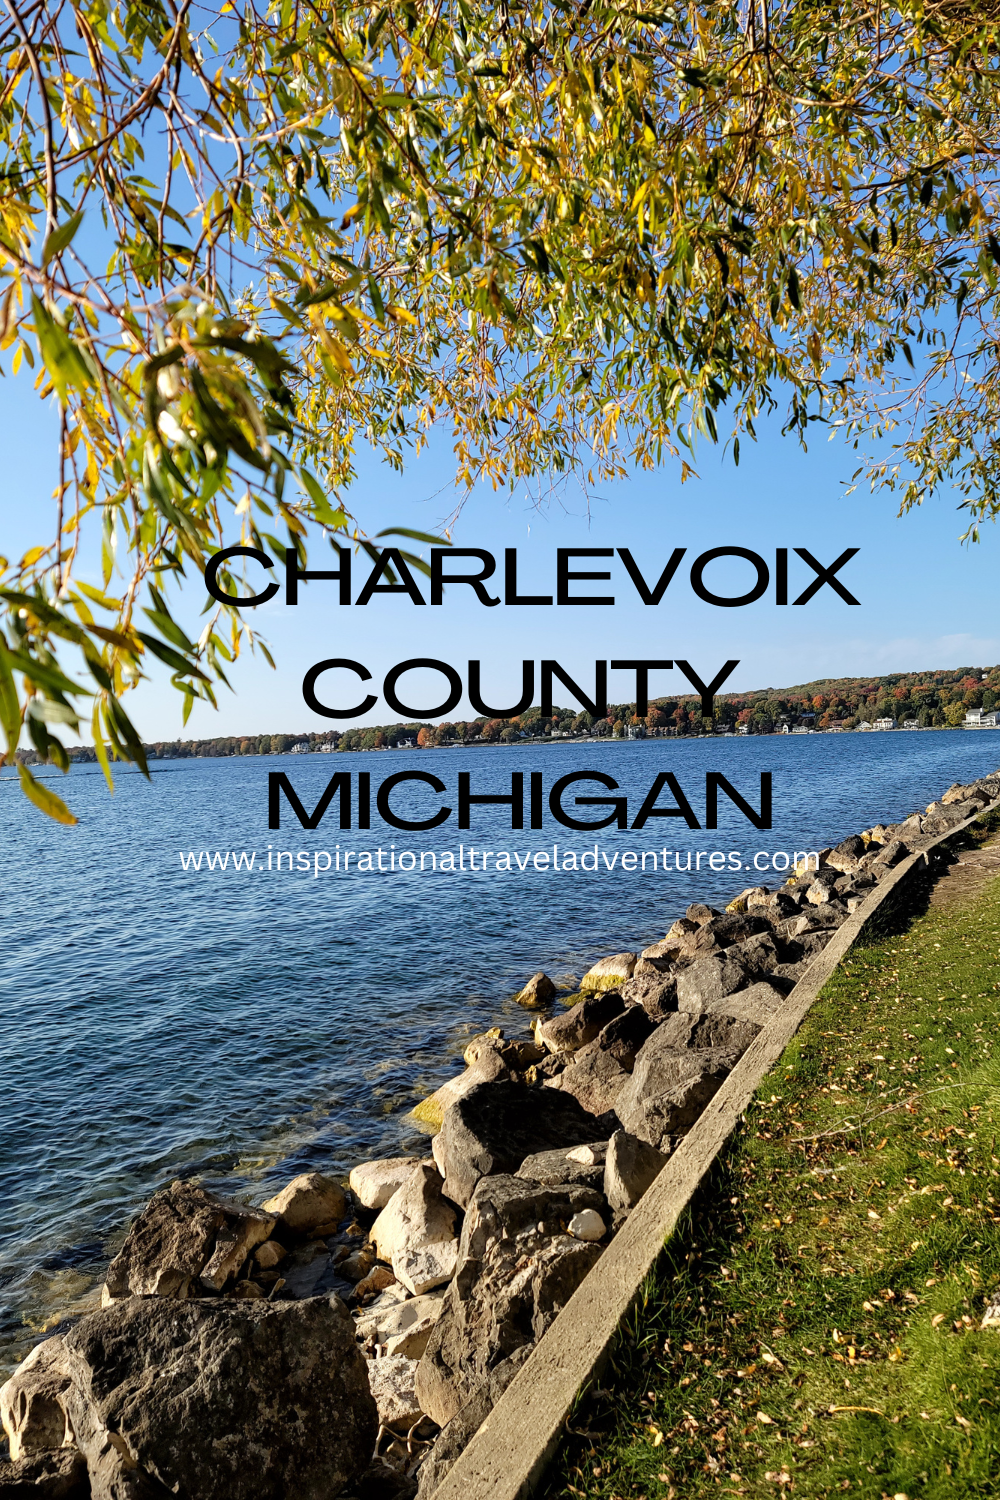 Charlevoix County Michigan